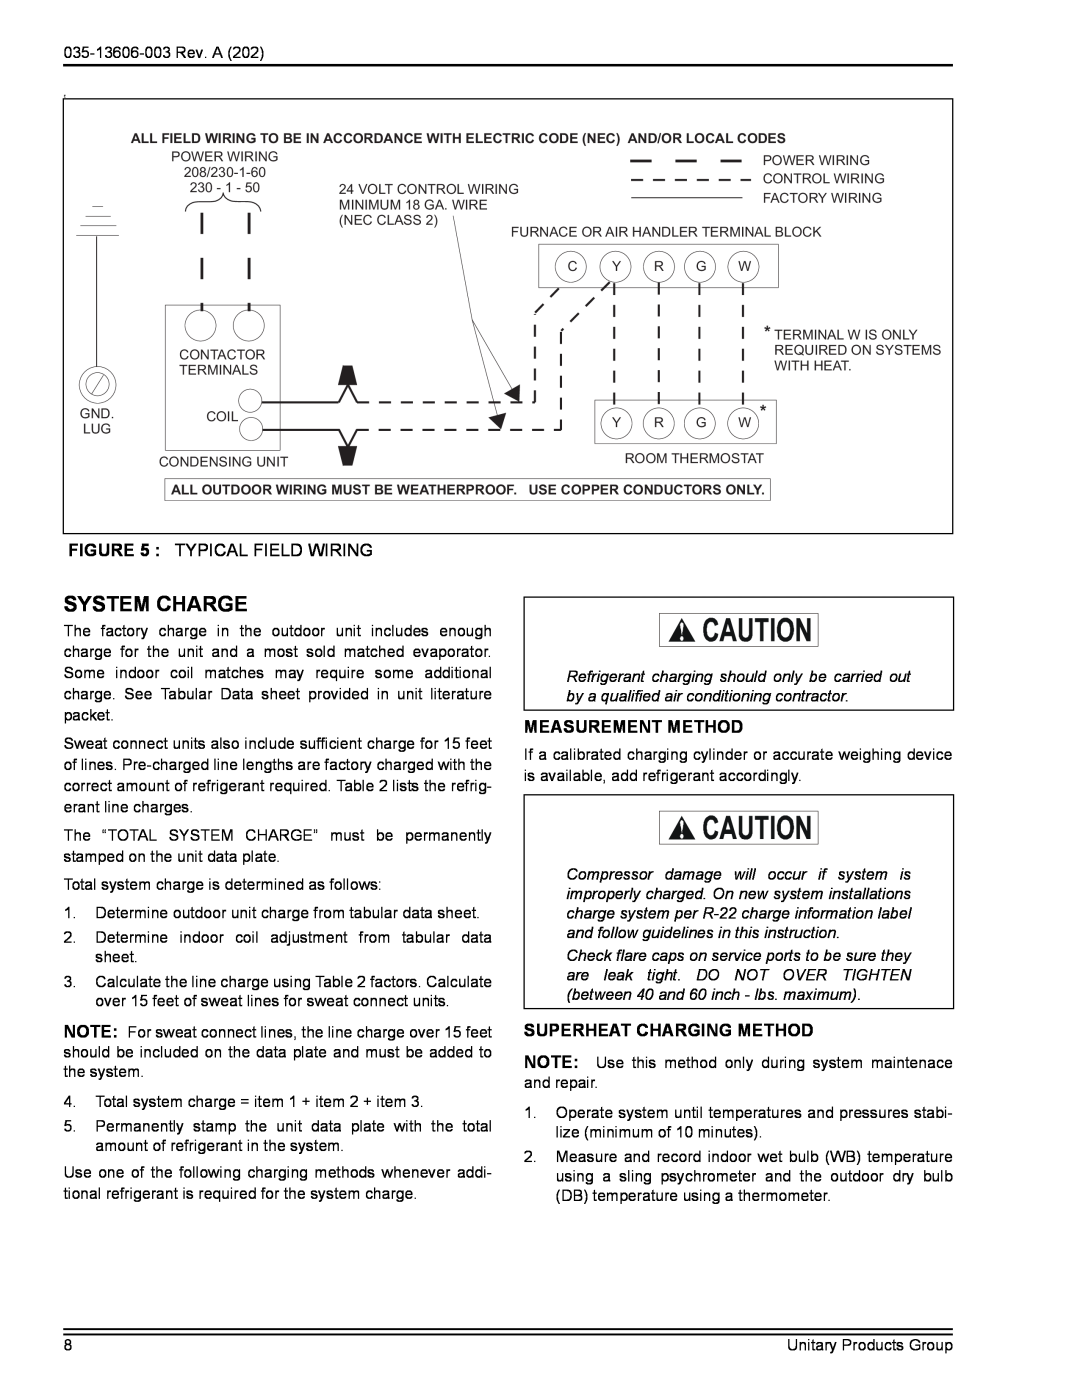 York 13 AND 14 SEER, 10, 12 manual System Charge, Measurement Method, Superheat Charging Method 